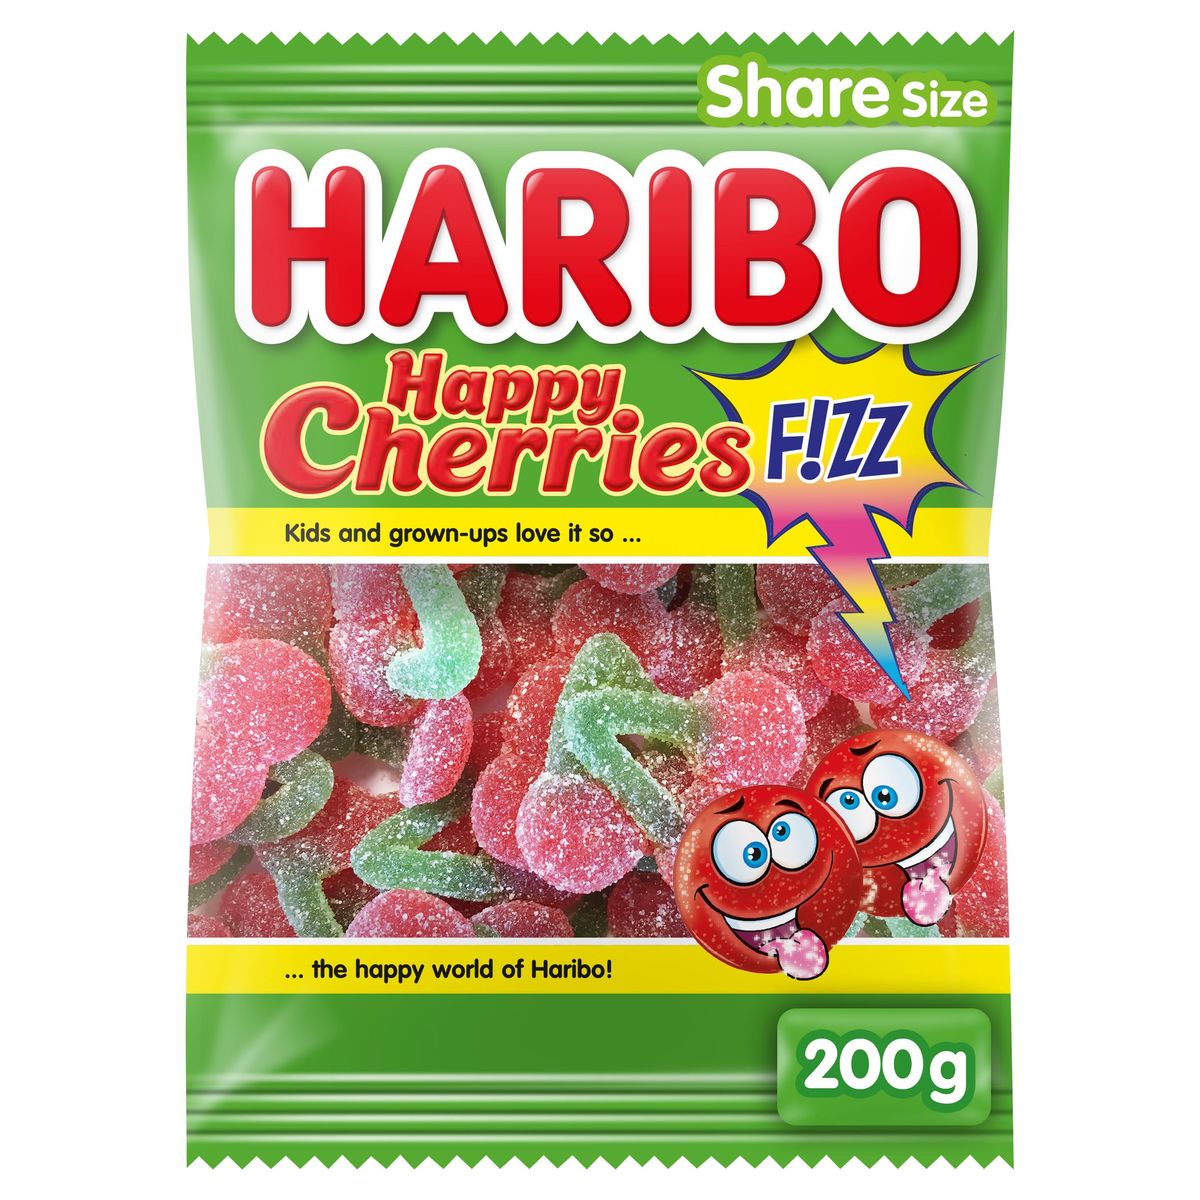 Haribo Happy Cherries F!ZZ 200 g